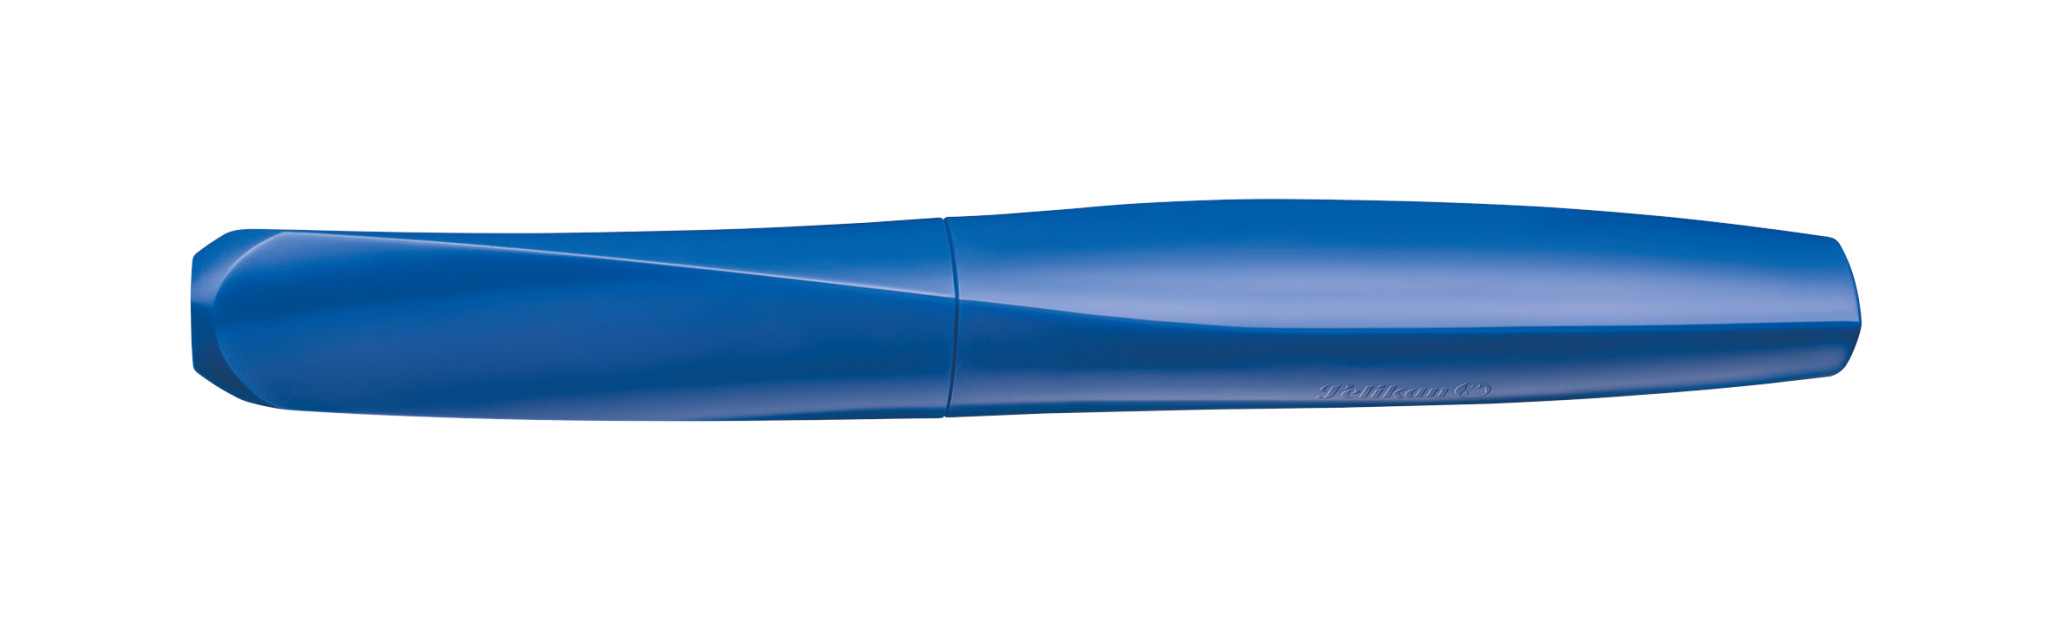 Pelikan Füllh. Twist P457 Deep Blue M +2TP Blister - Blau - Rundspitze - Edelstahl - Medium - Beidhändig - Deutschland